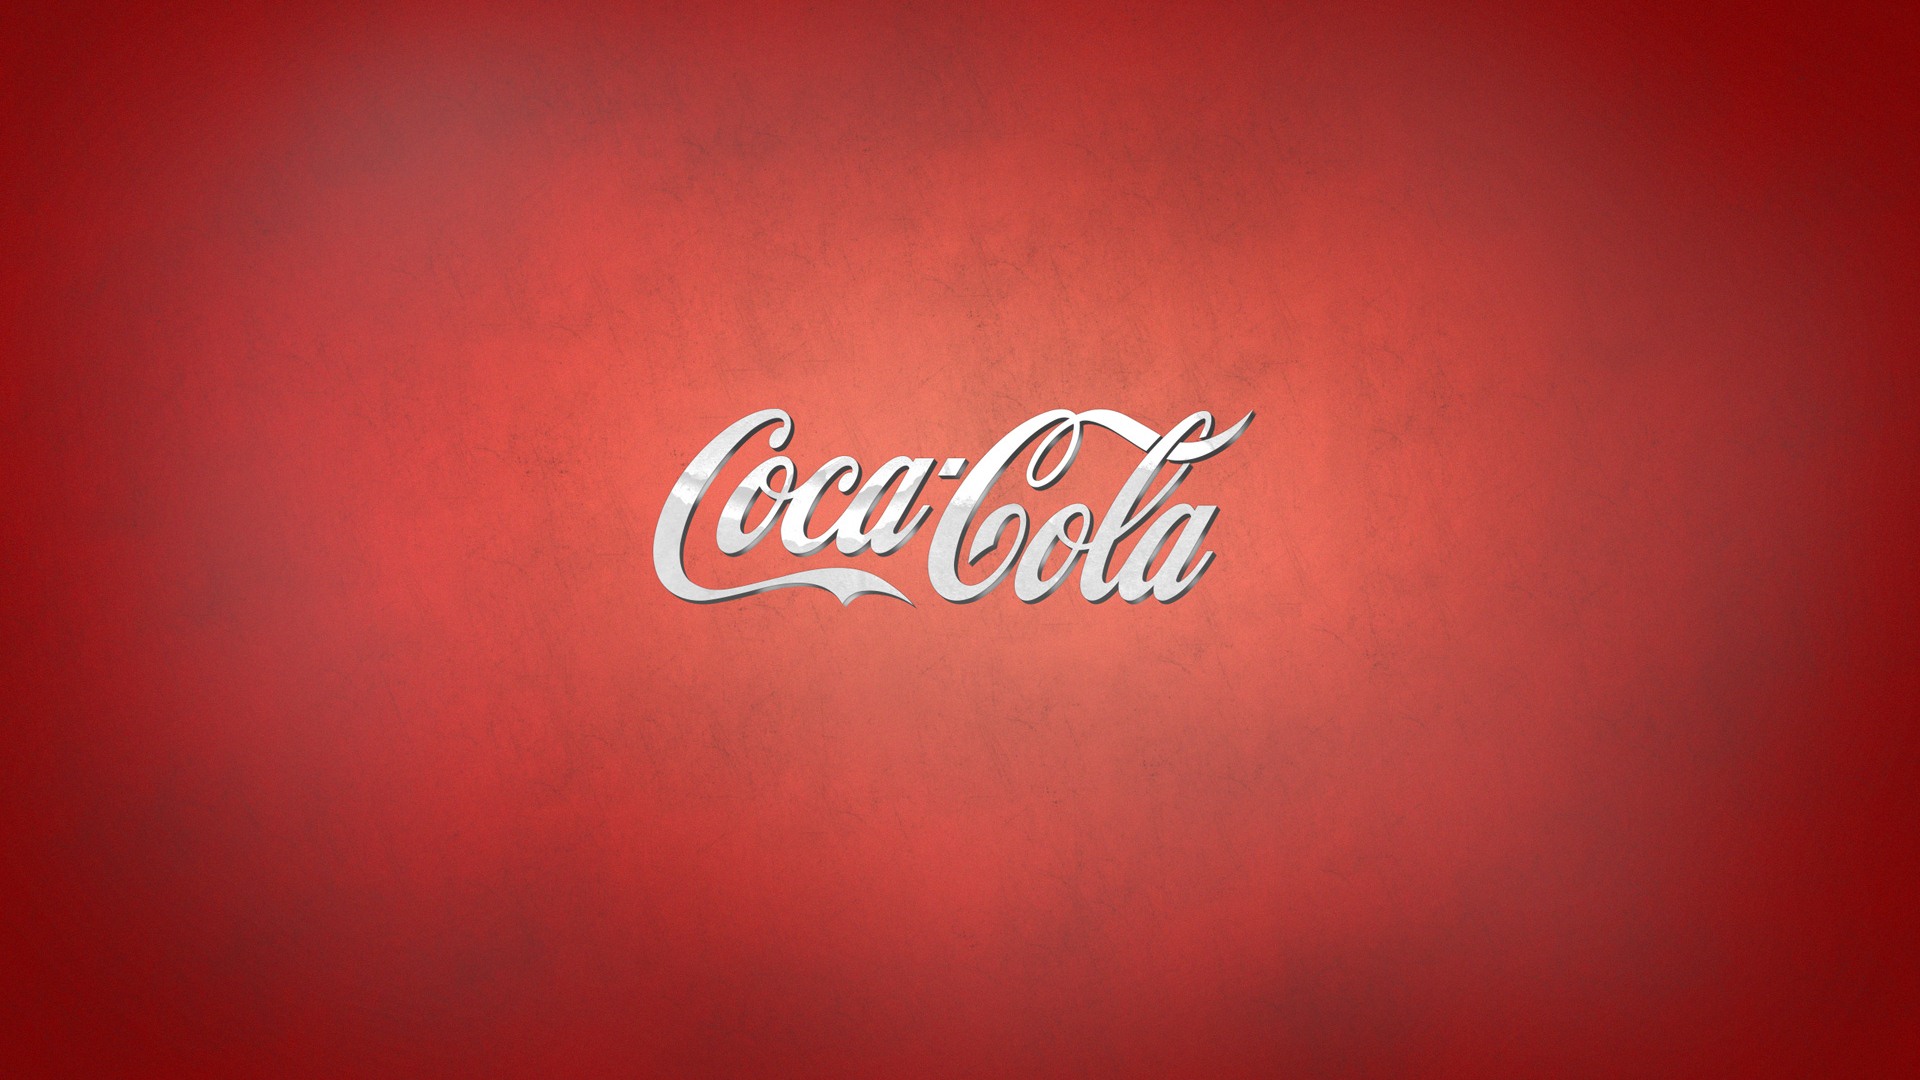 Coca-Cola 可口可乐精美广告壁纸16 - 1920x1080